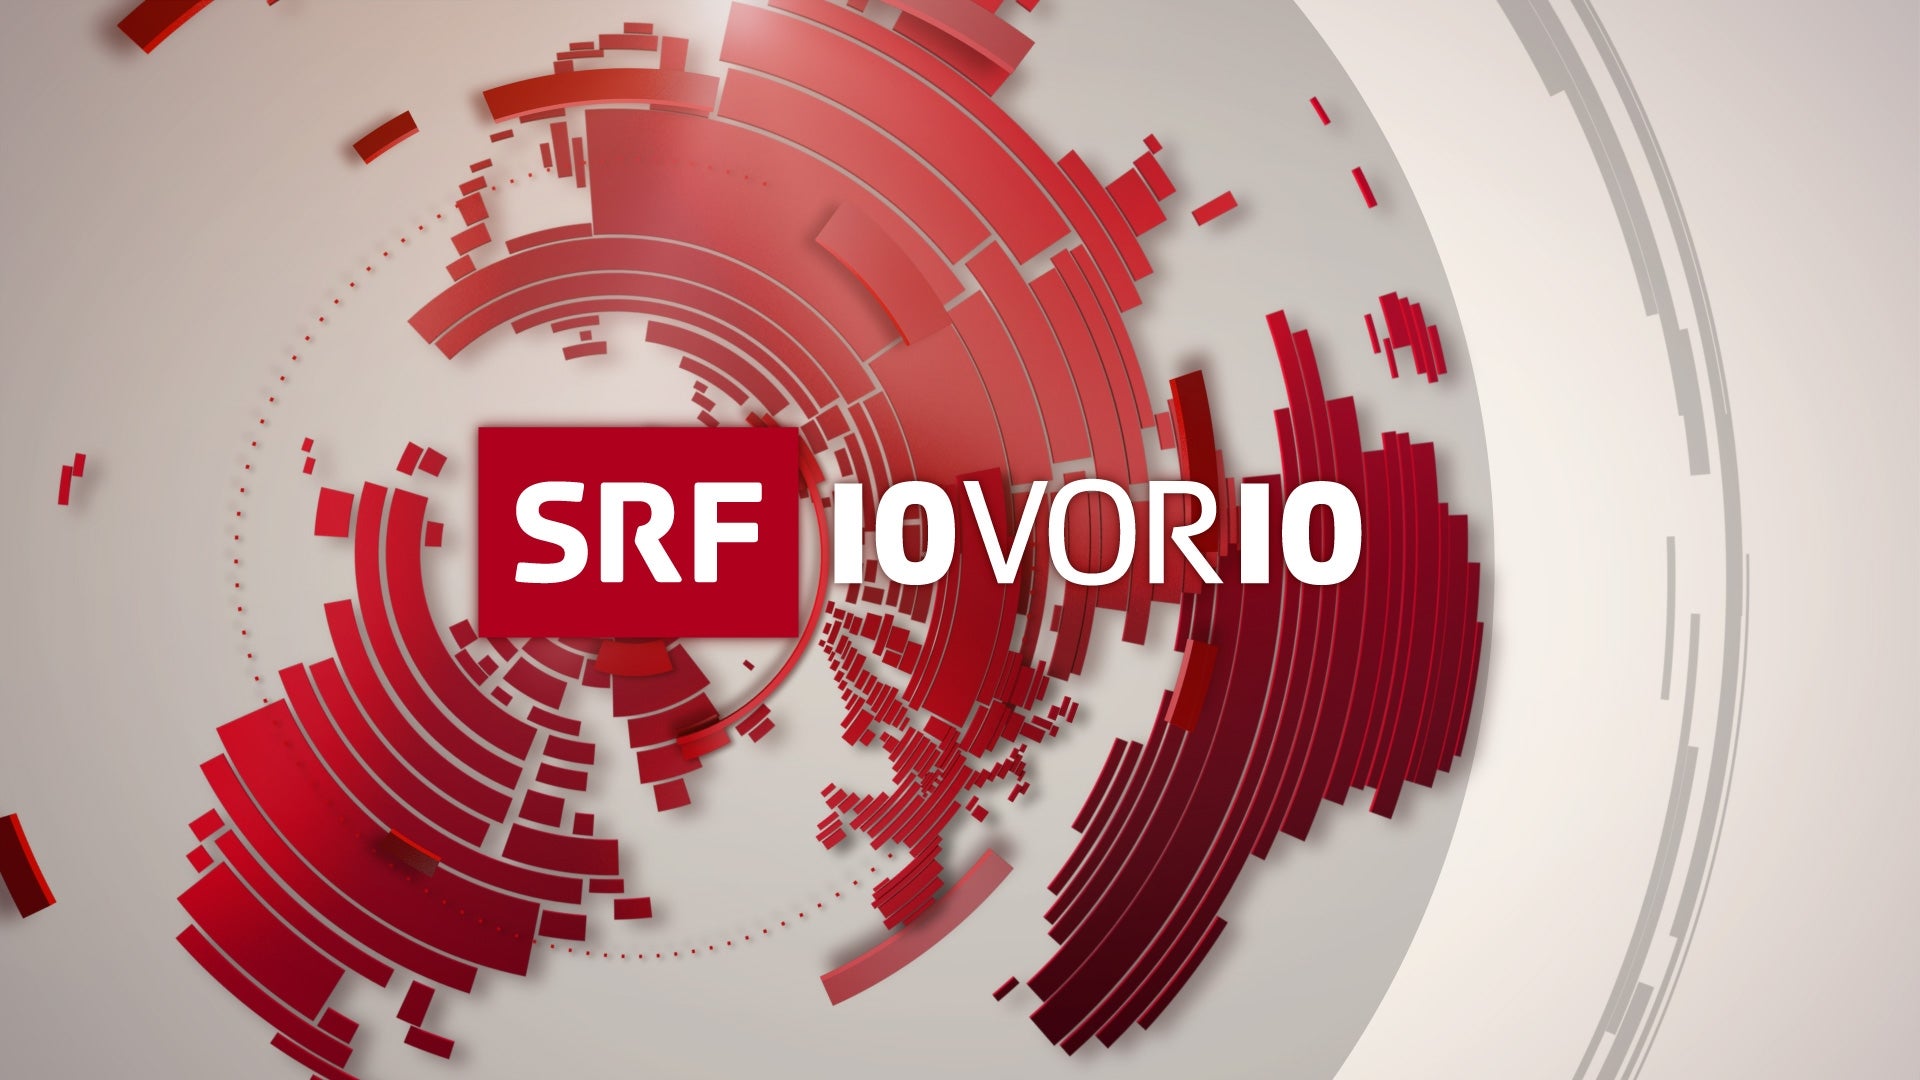 TV ratings for 10vor10 in Portugal. SRF 1 TV series